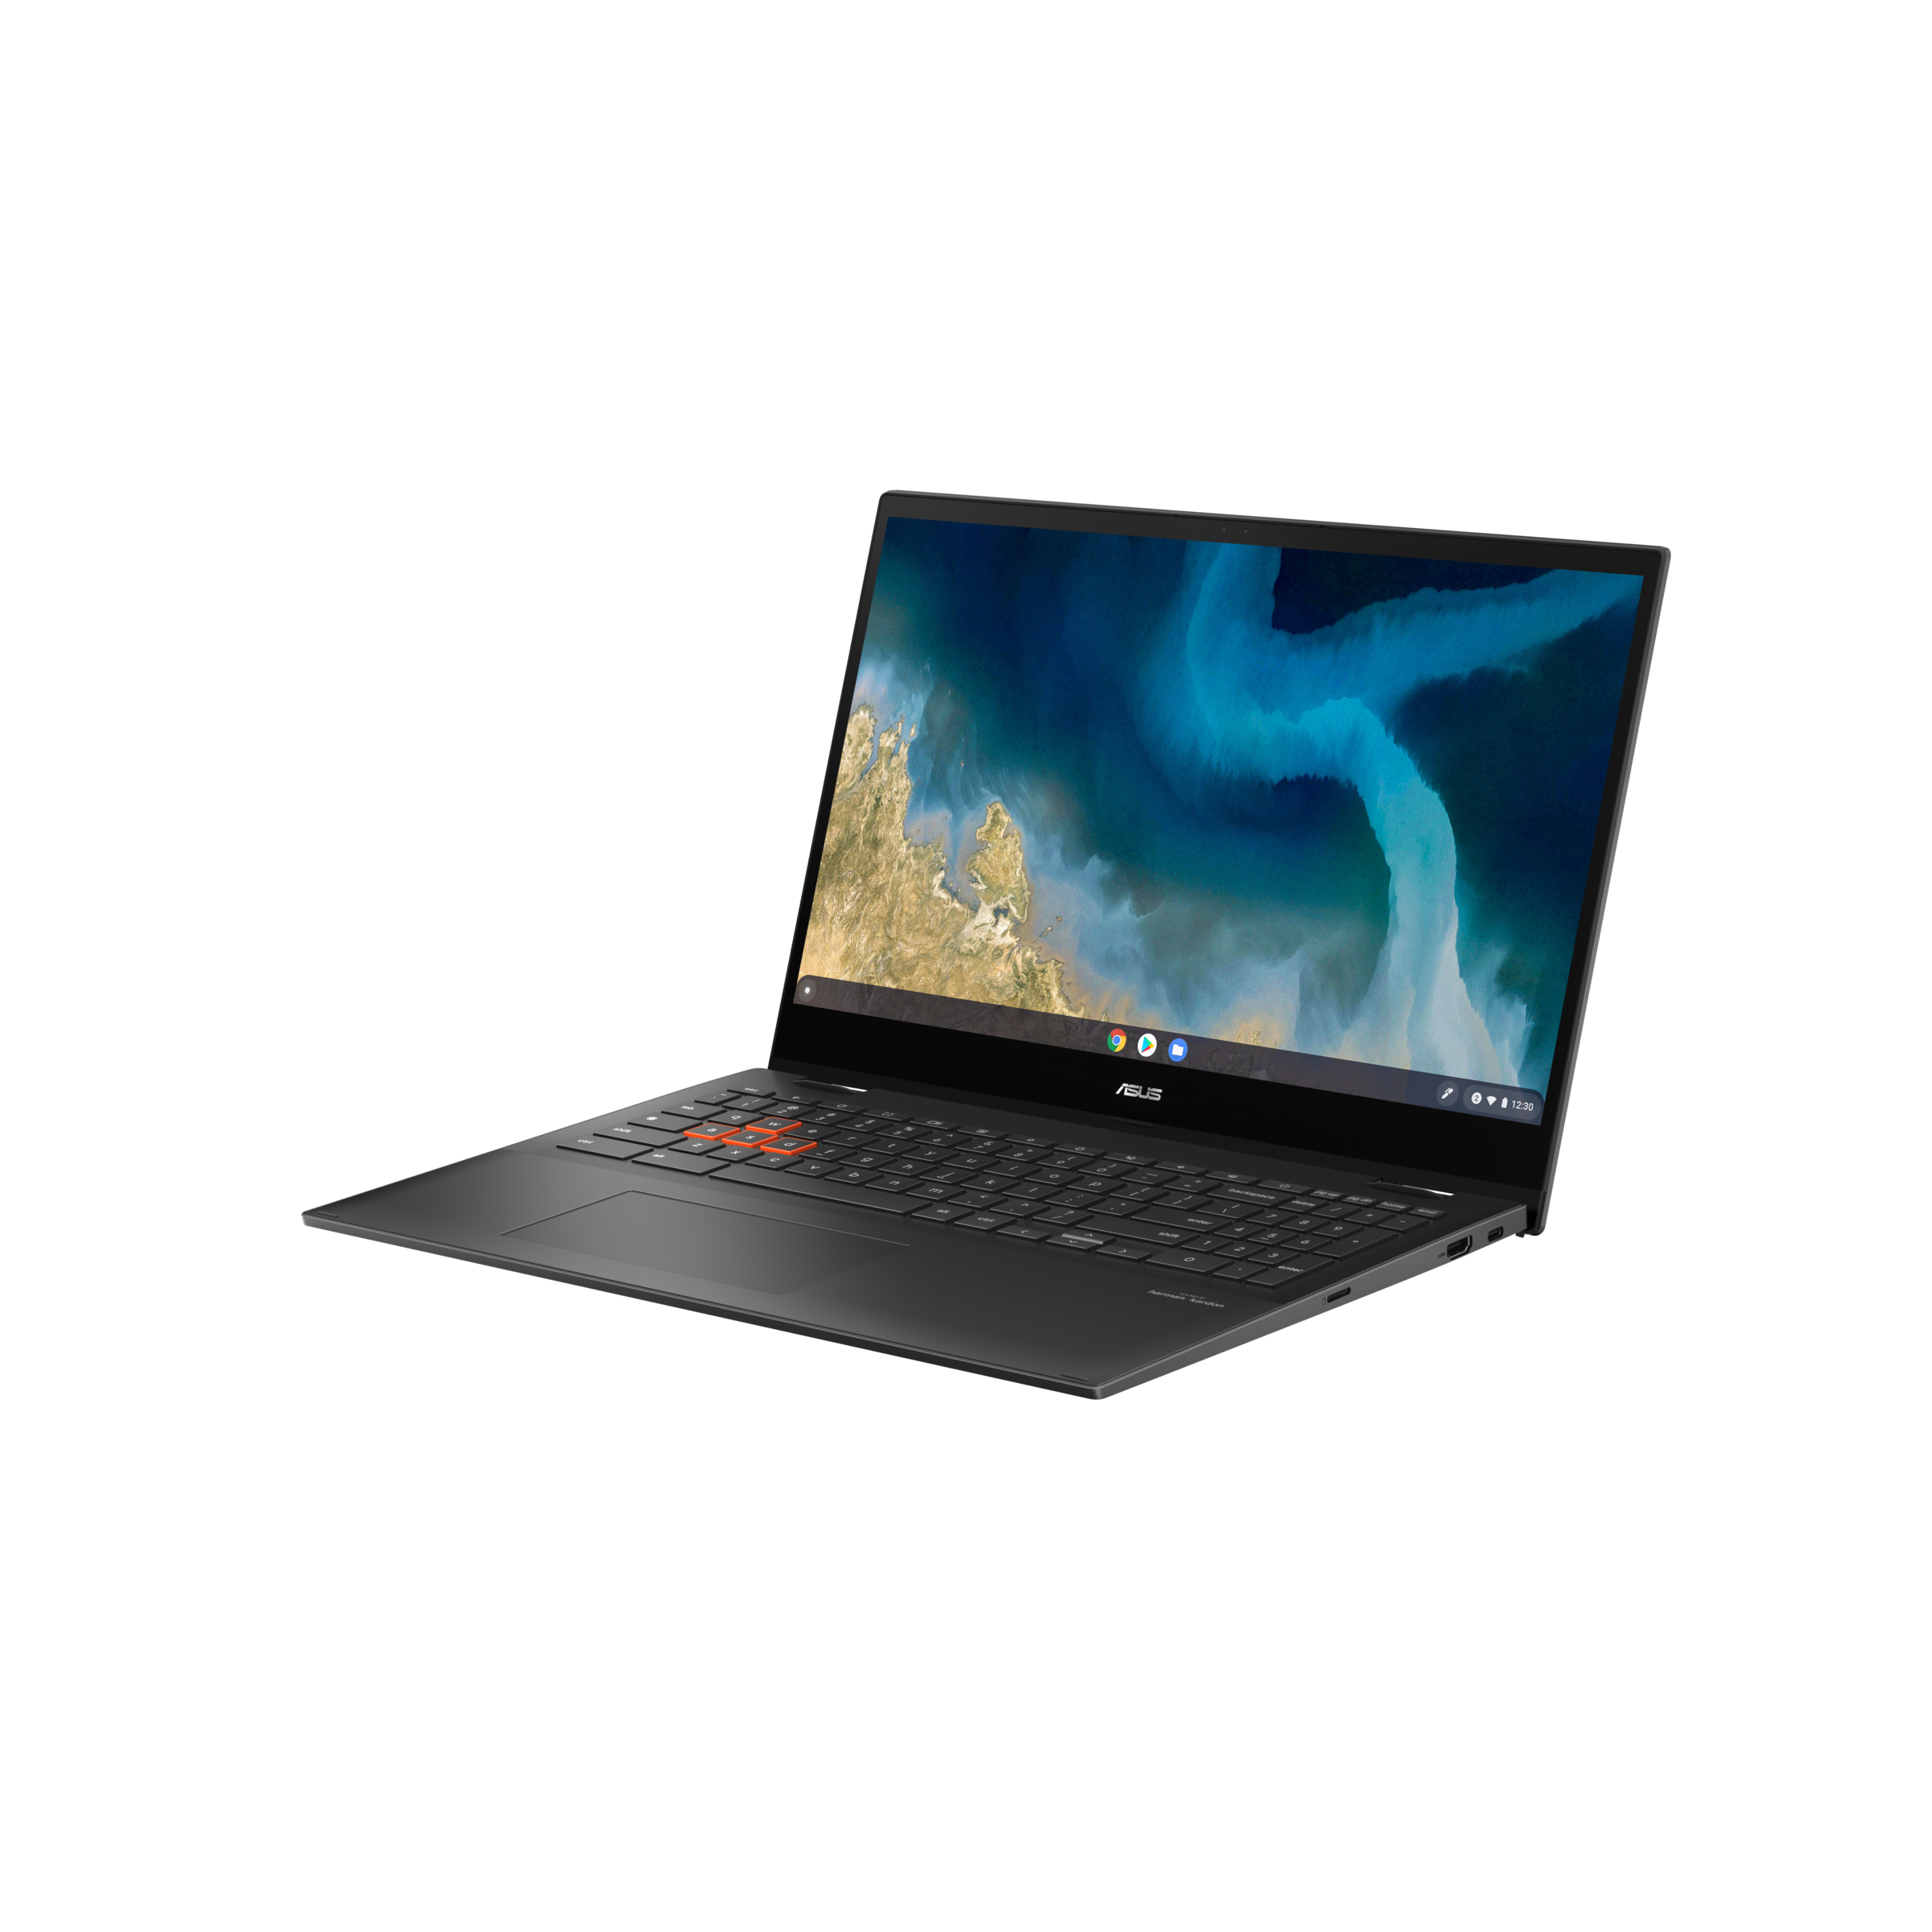 Asus Chromebook Flip Cm5 Cm5500 Laptops For Home Asus Global